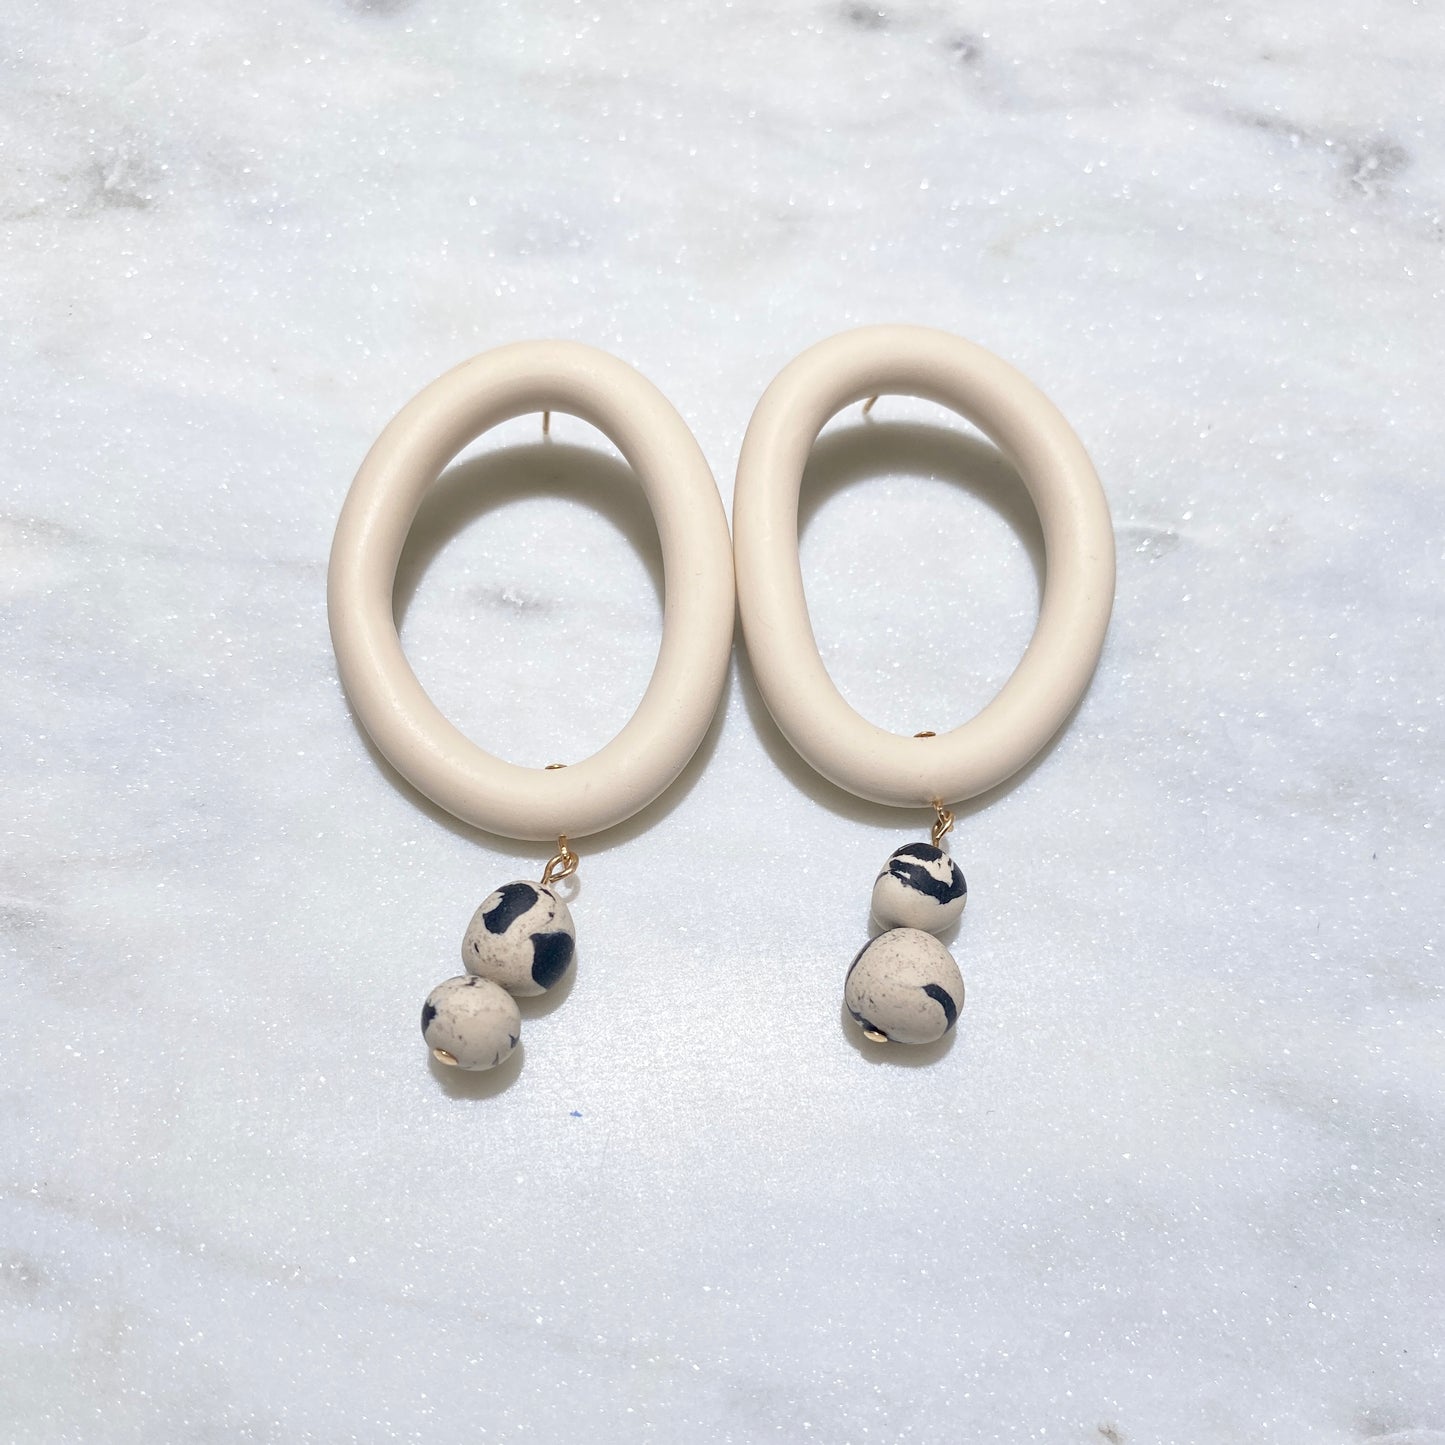 Large OOAK two bead earrings